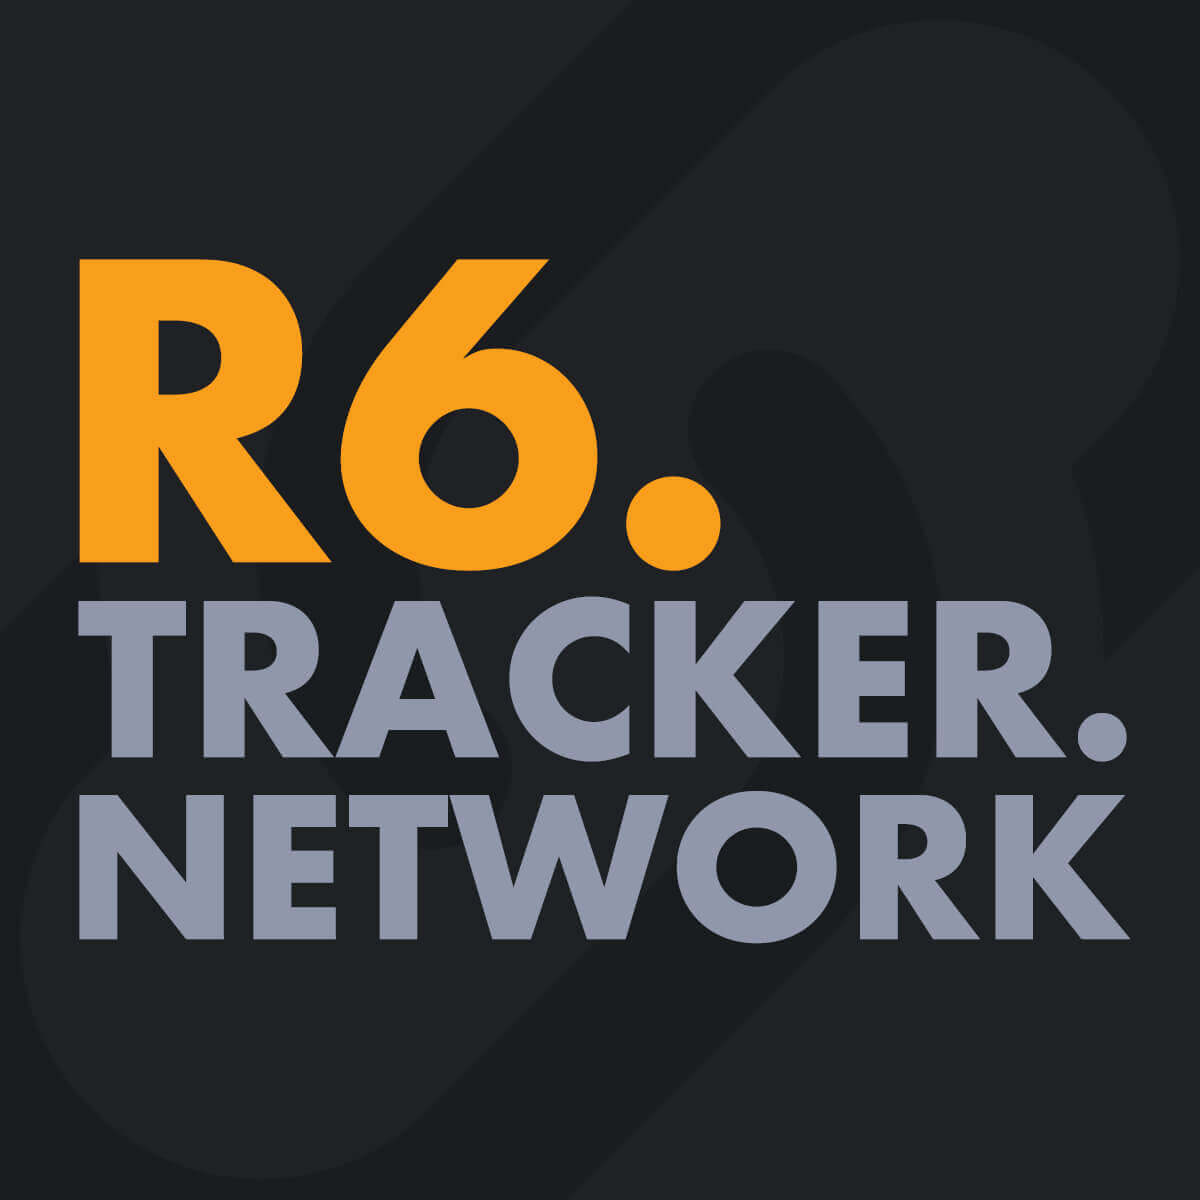 Tracker r6s R6 tracker